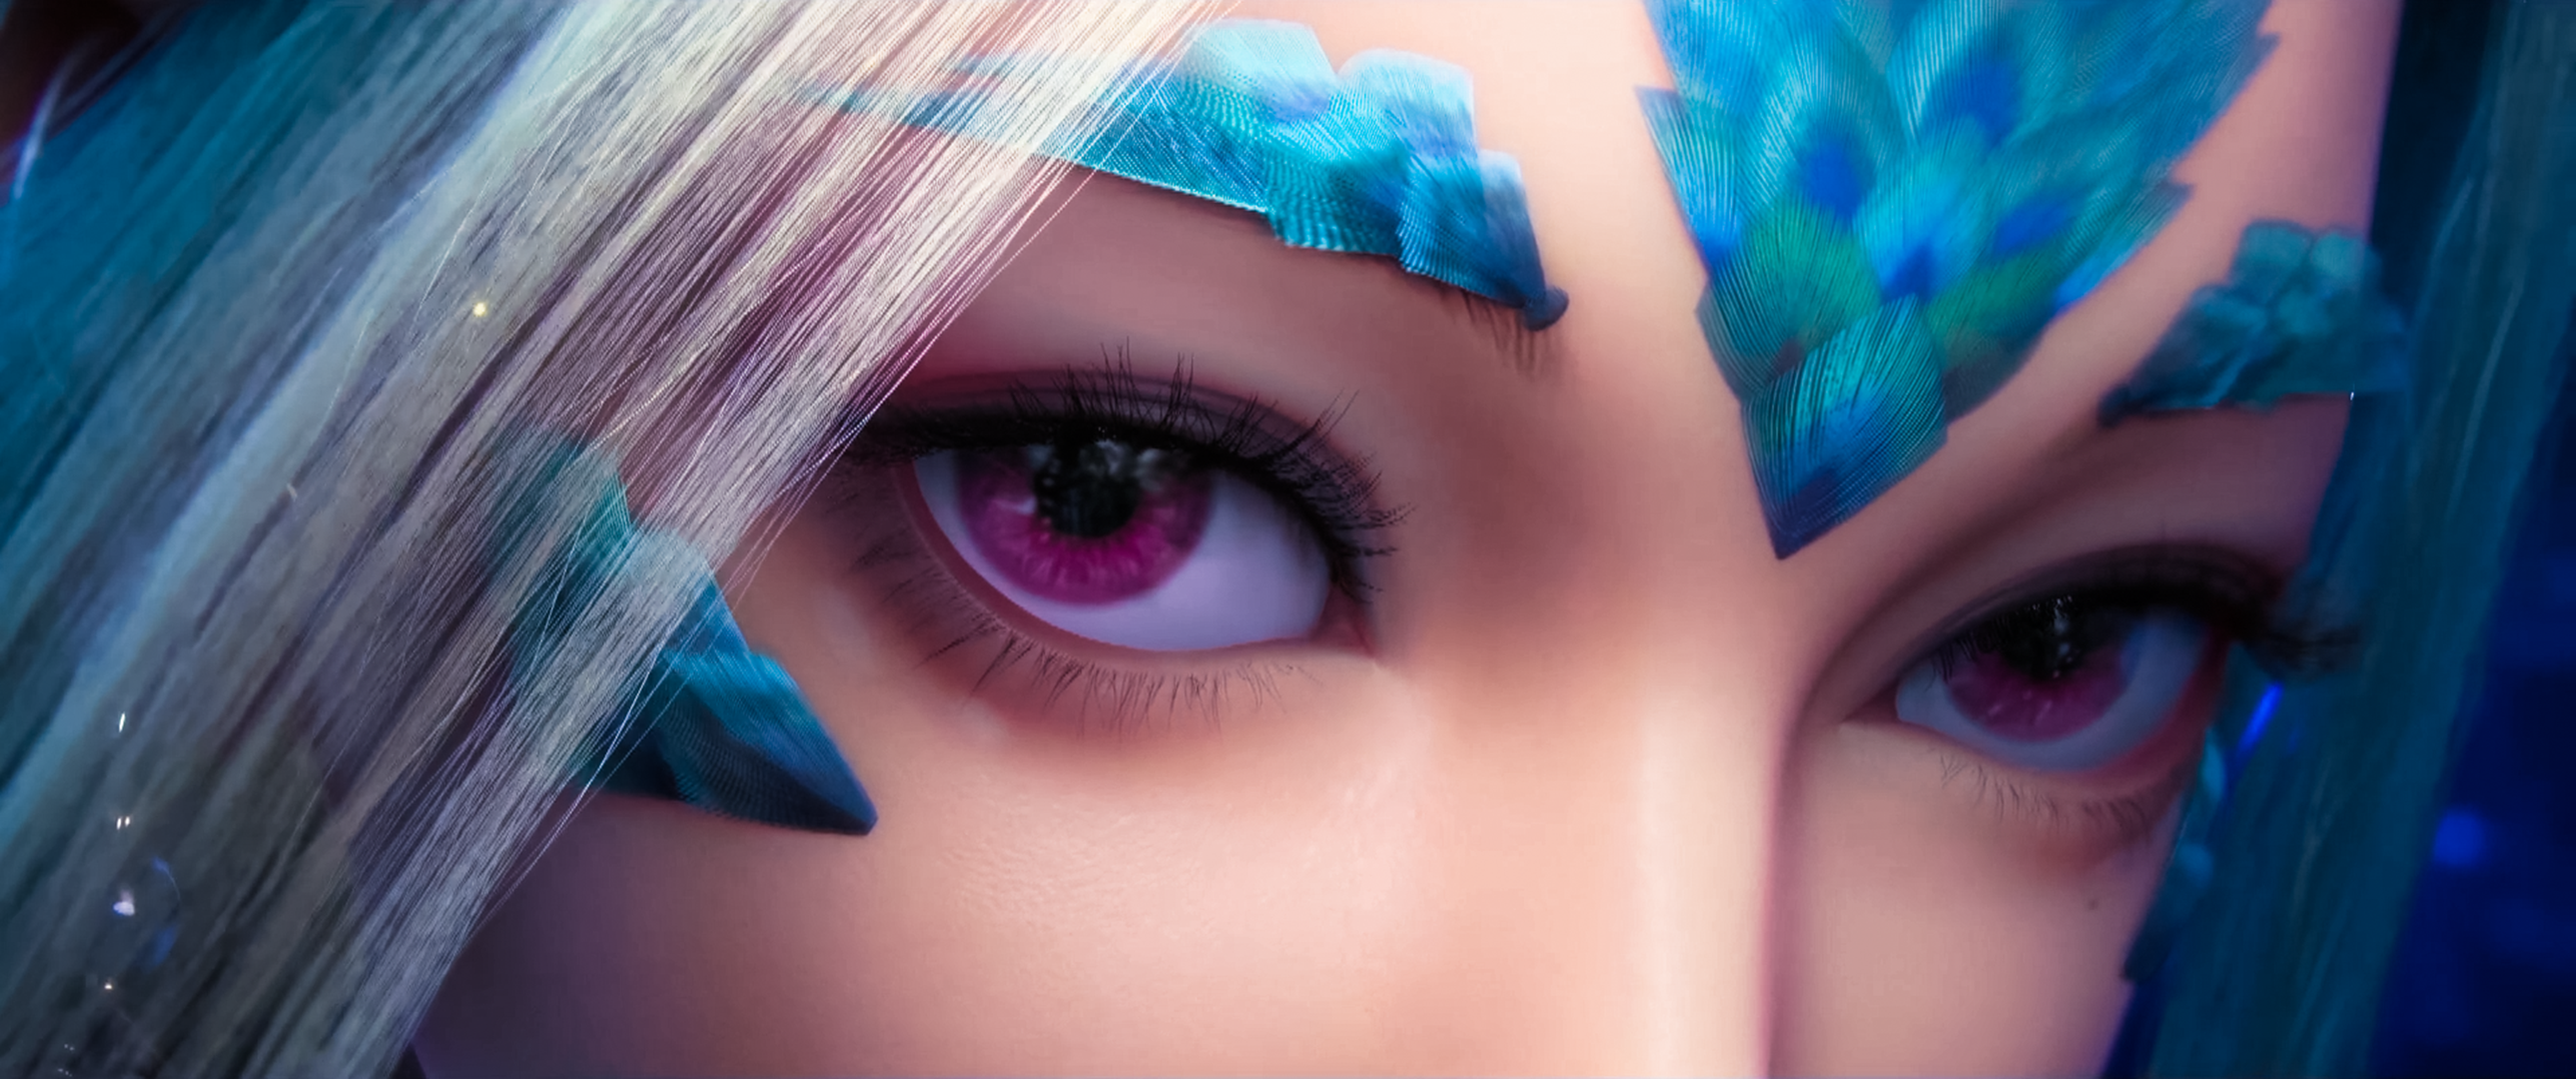 General 2579x1080 Deity Introspection CGI women face eyes Asian fantasy art purple eyes fantasy girl